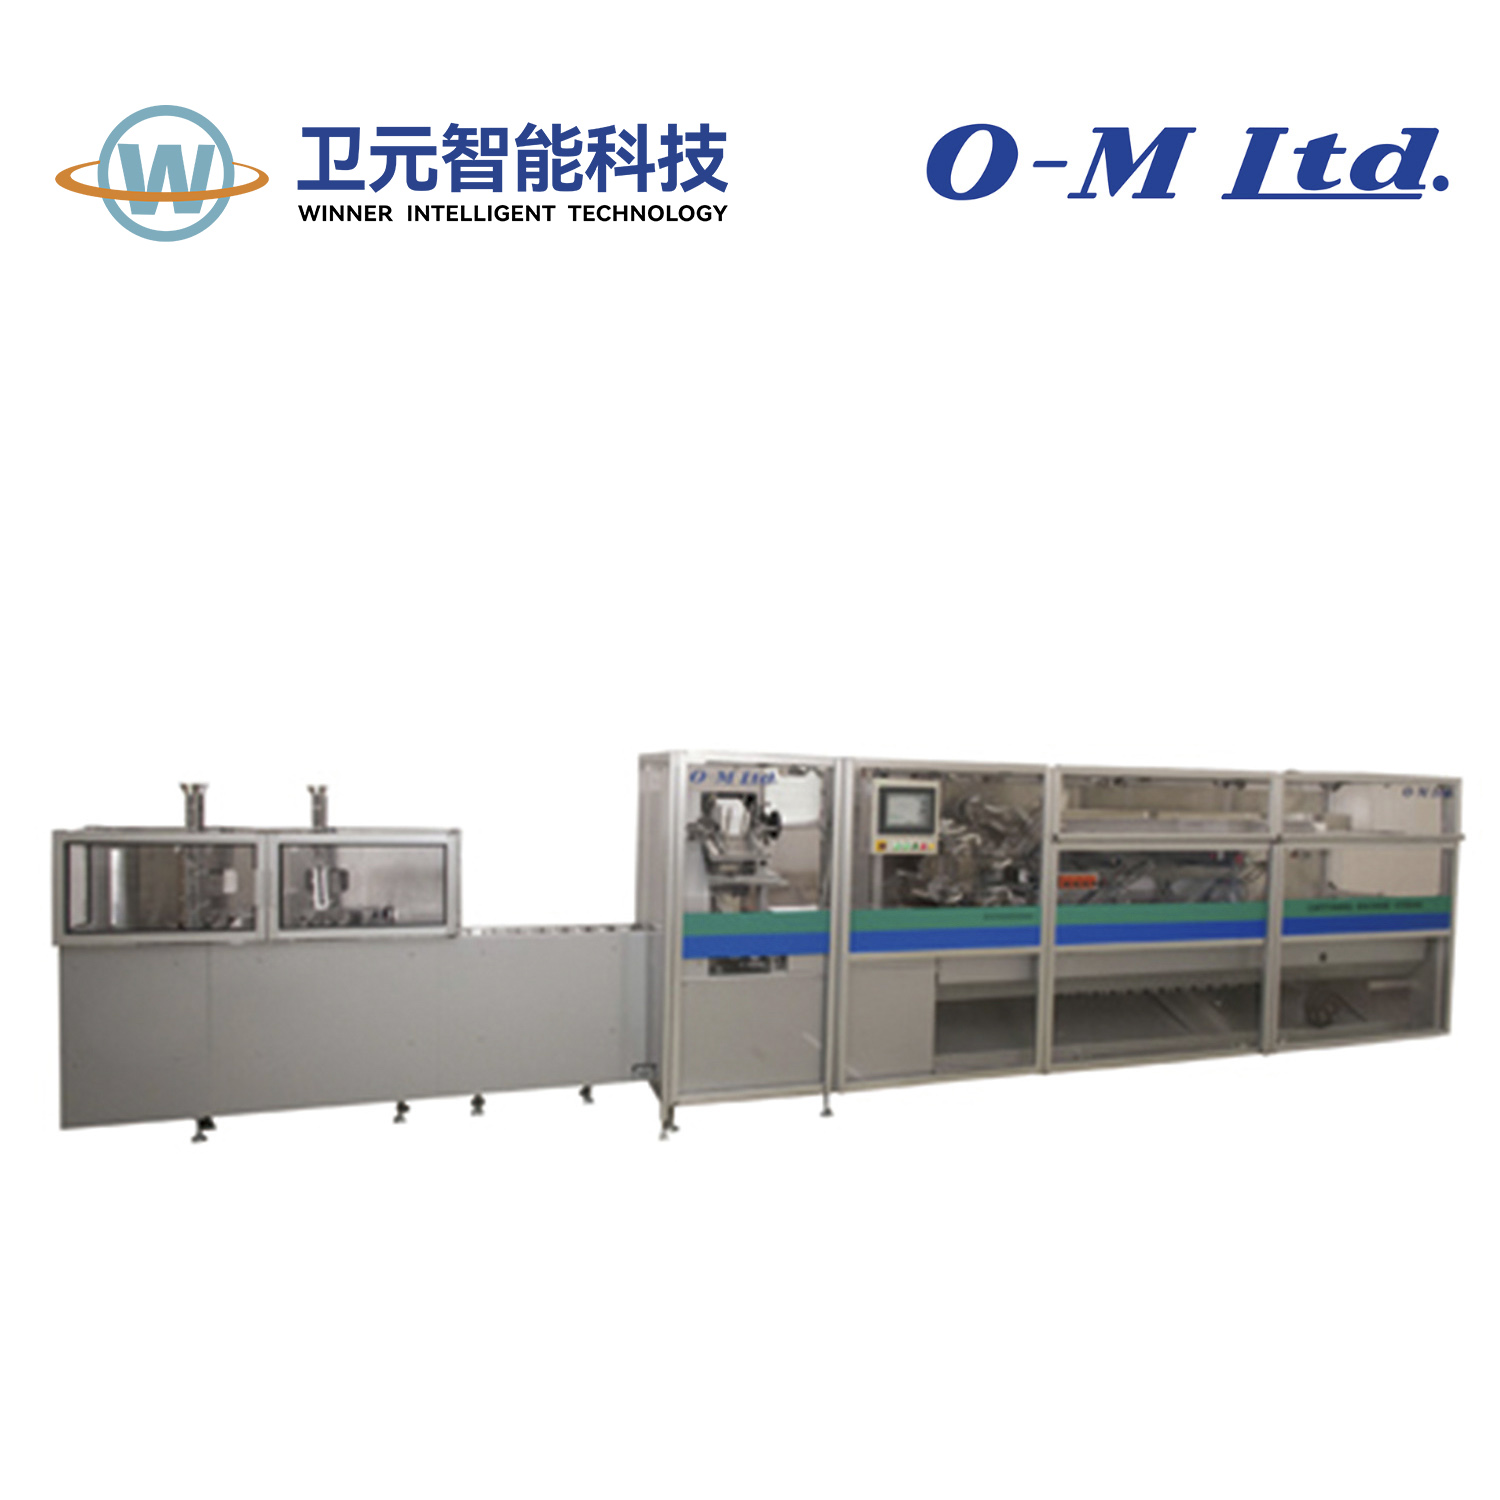 O-MM自动装盒机